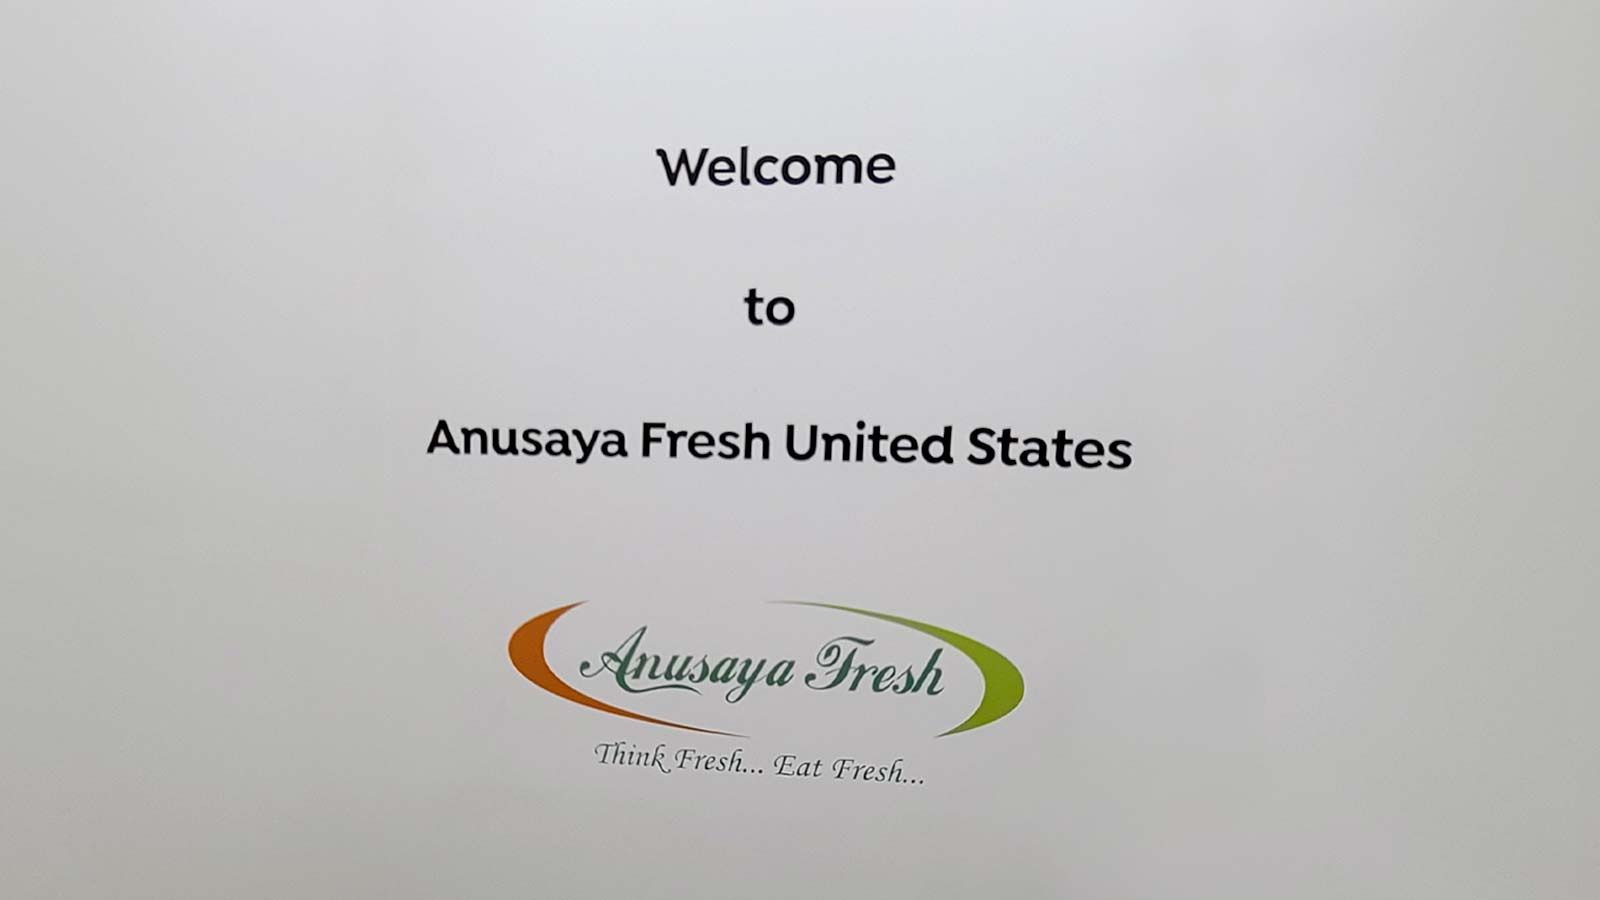 Anusaya Fresh custom decal adhered to the interior wall